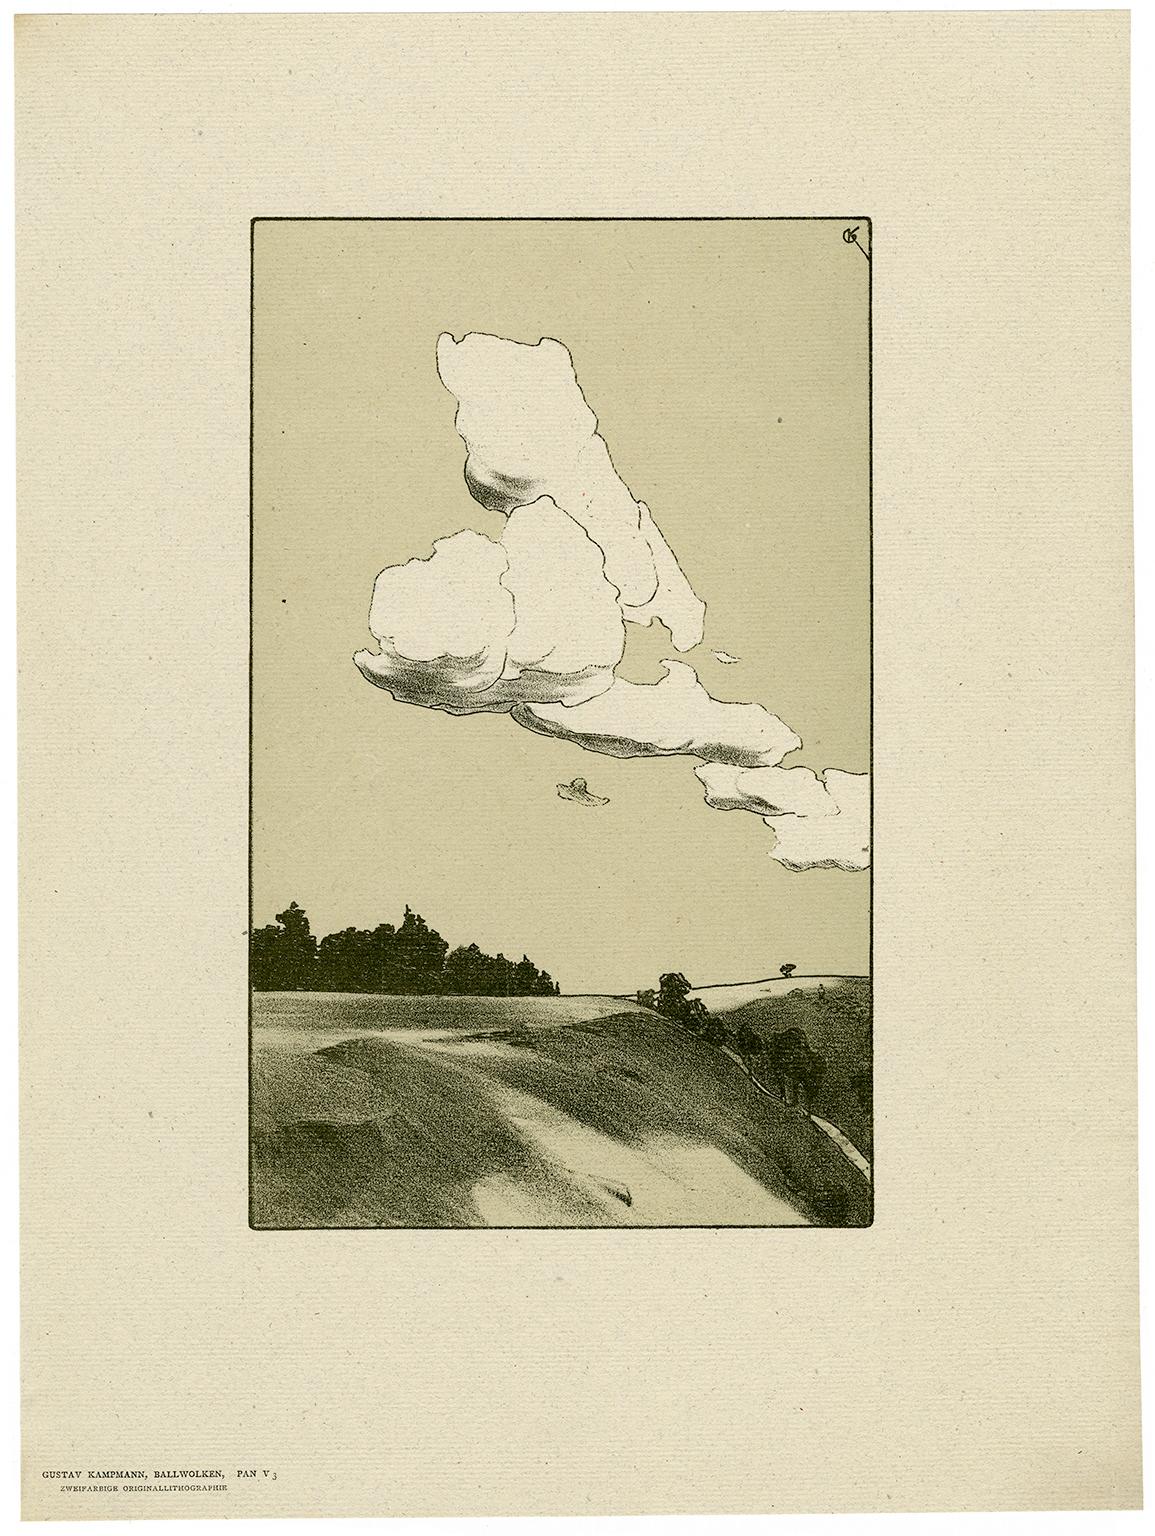 Ballwolken (Cumulus Clouds) - Print by Gustav Kampmann